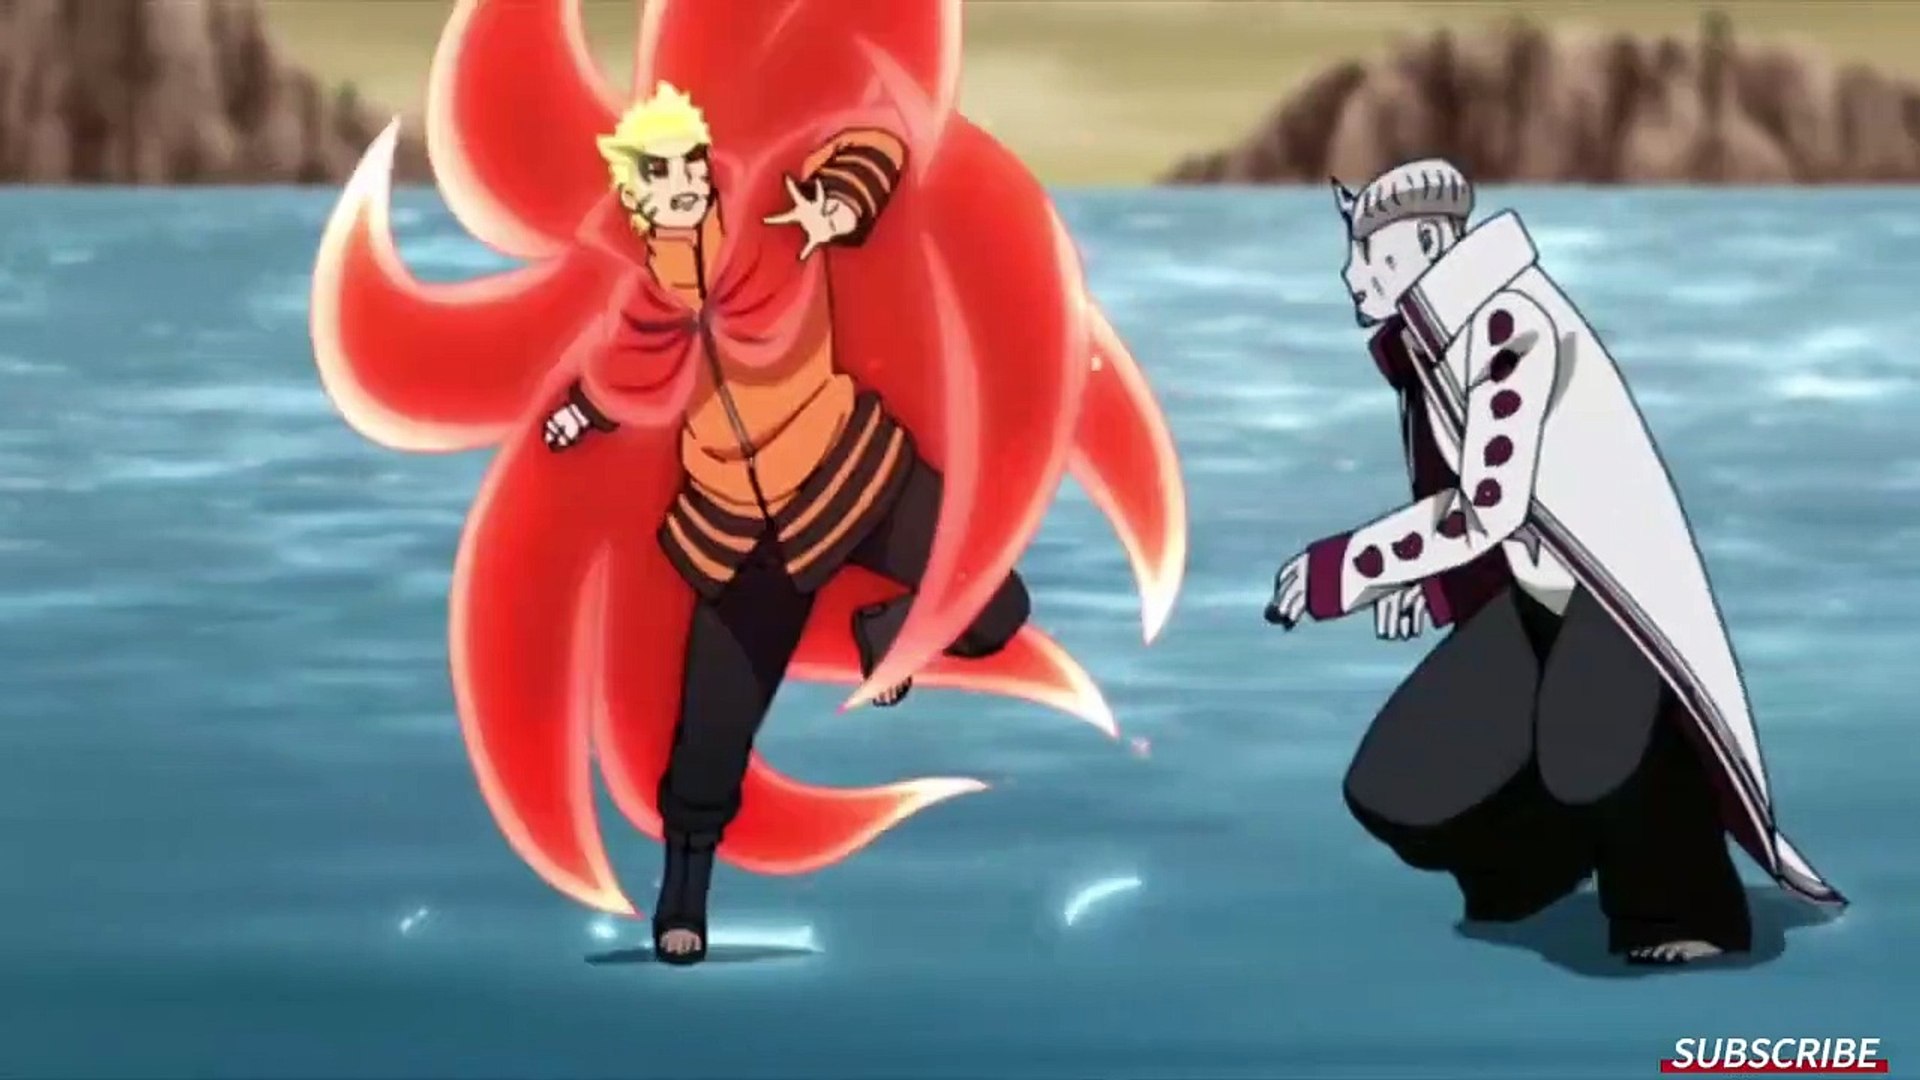 Boruto Unleashes Naruto's Baryon Mode in Stunning Fight: Watch